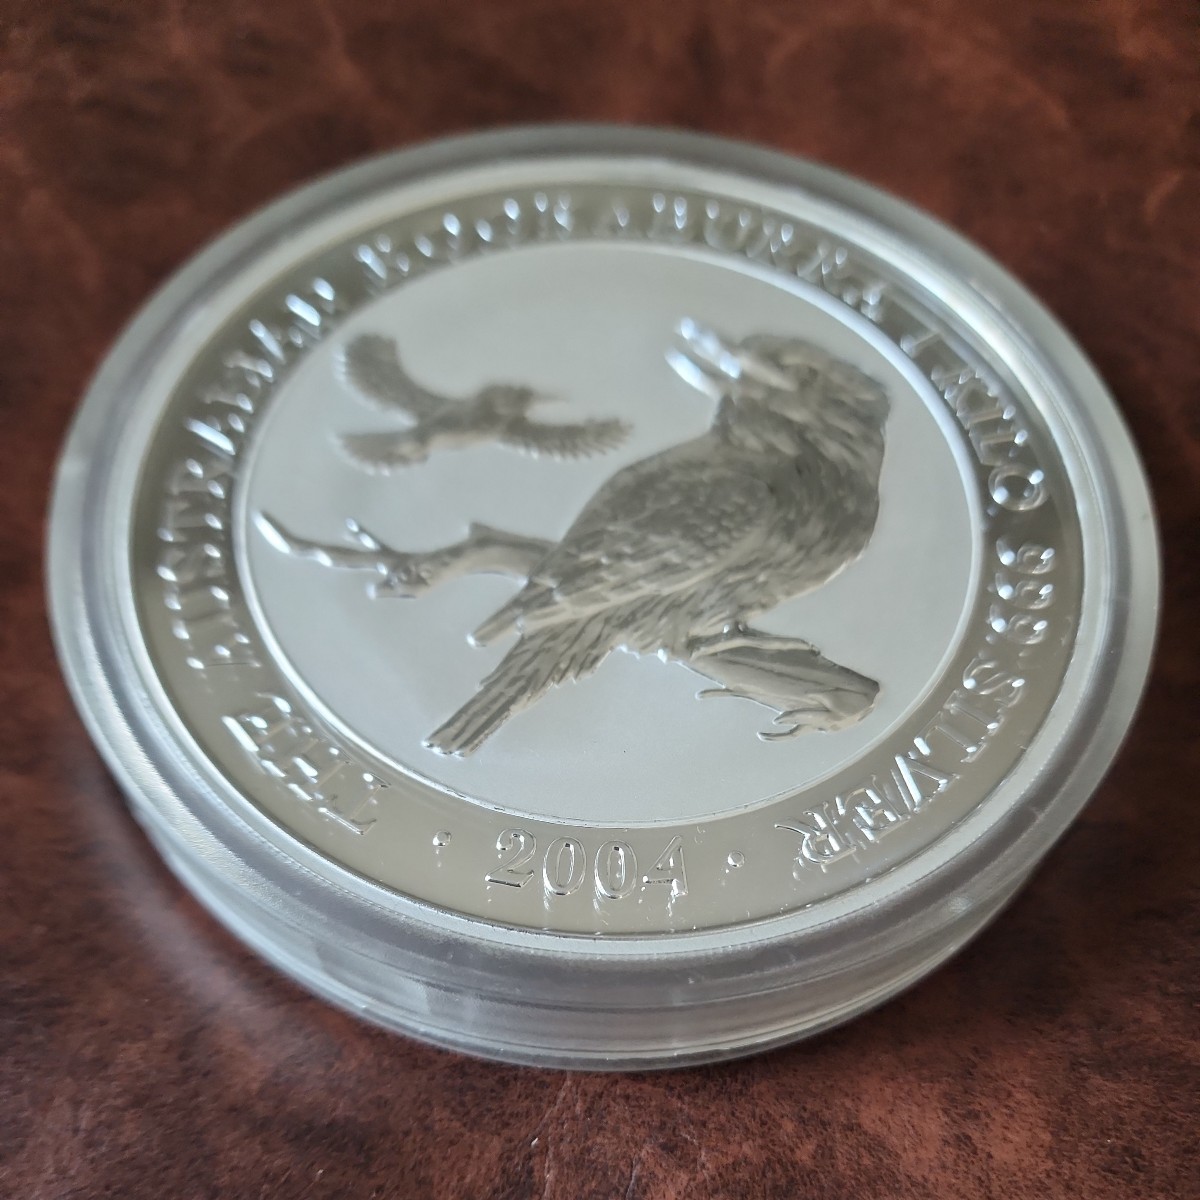 １kg銀貨 エリザベスⅡ世 2004年 オーストラリア記念プルーフ 999純銀製 カワセミ コイン プルーフ 純銀 透明プラスチックケース入_画像5